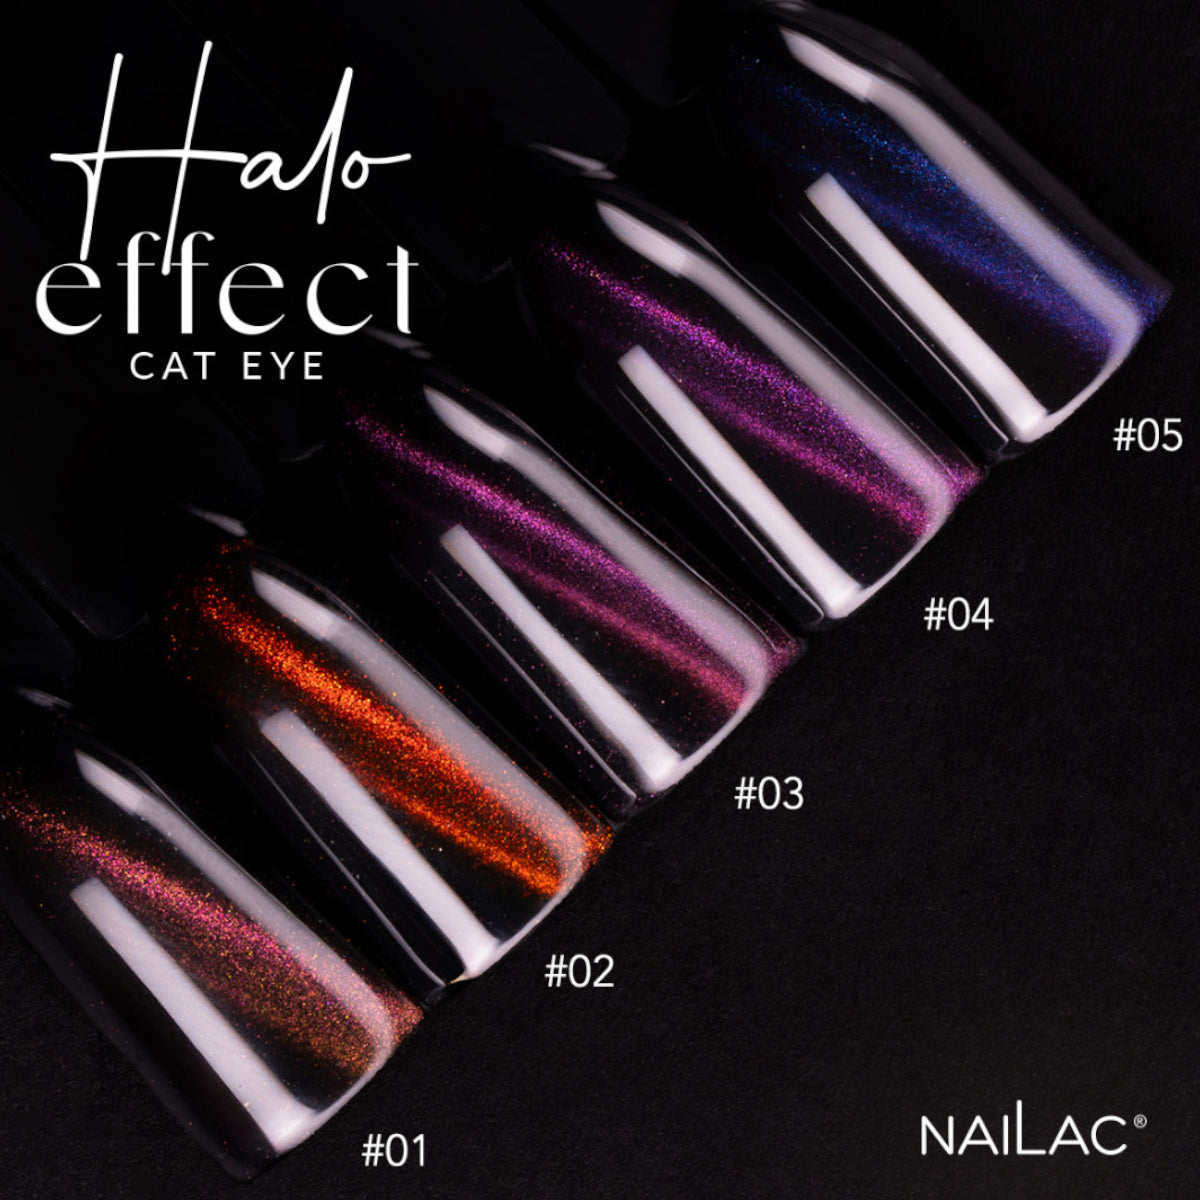 NaiLac UV/LED Gel Nail Polish Halo Effect Cat Eye 04 Collection